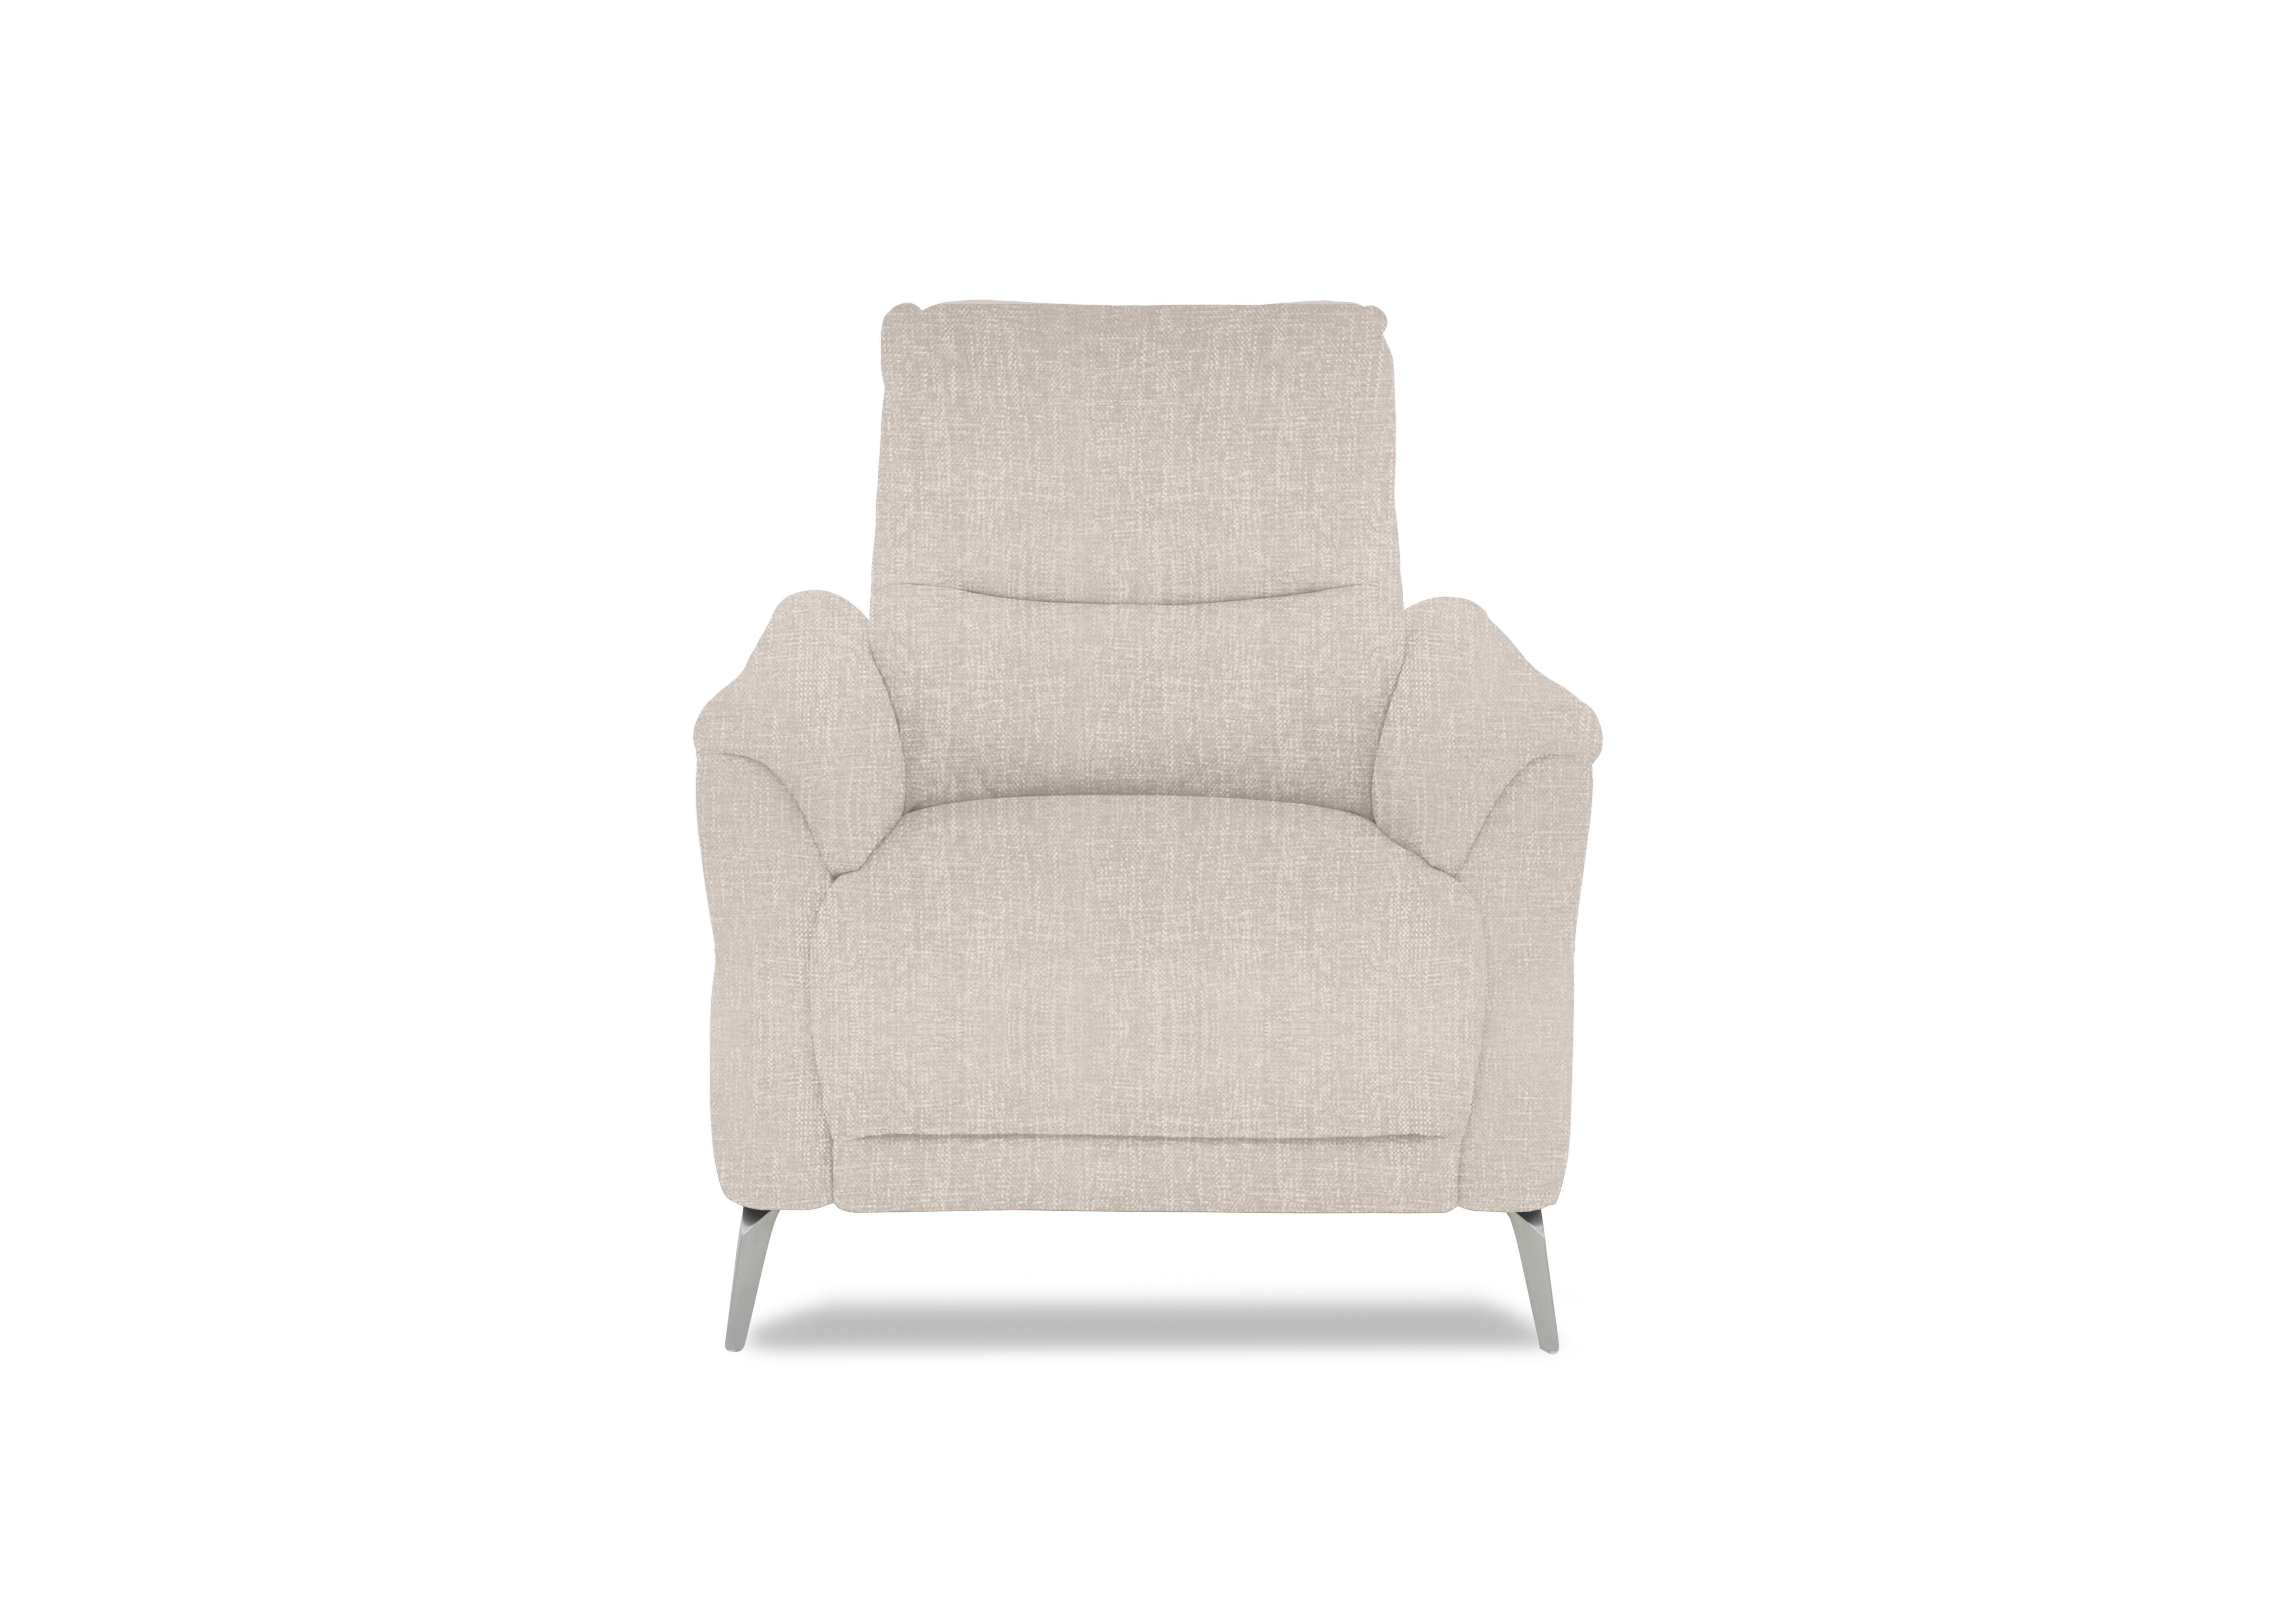 Daytona Fabric Chair in 13445 Anivia Nature on Furniture Village